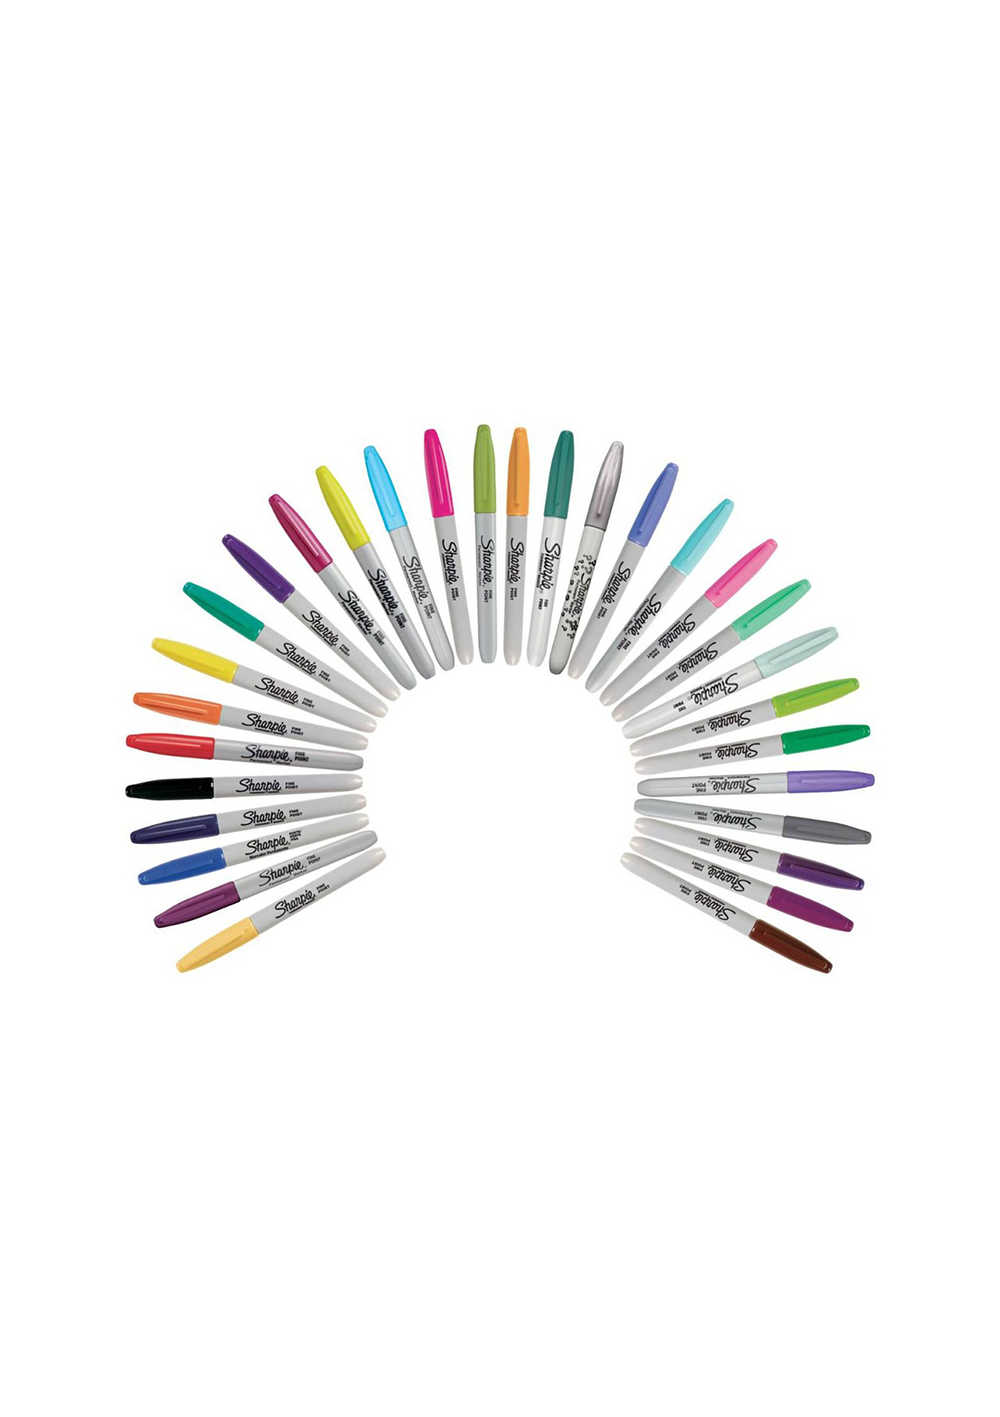 https://www.coloranimal.cl/18599-large_default/marcadores-permanentes-sharpie-pack-ruleta-30-colores-tie-dye.jpg